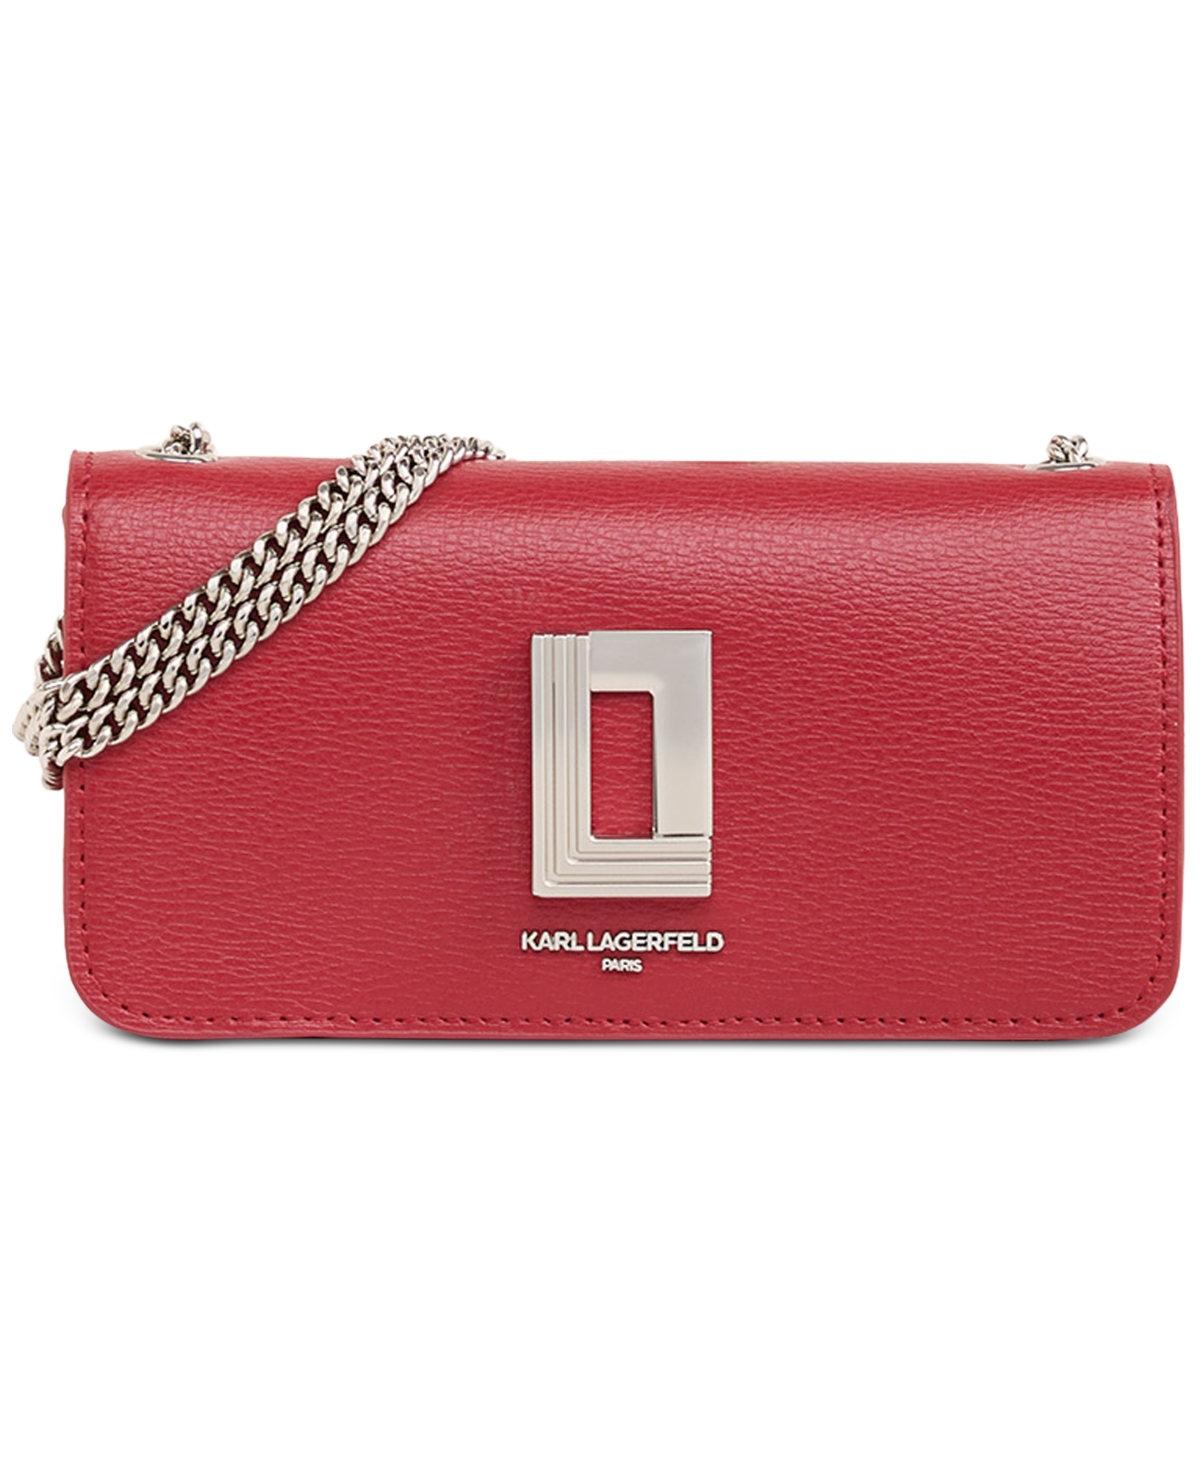 Karl Lagerfeld Lafayette Leather Wallet On A Chain In Mediun Red